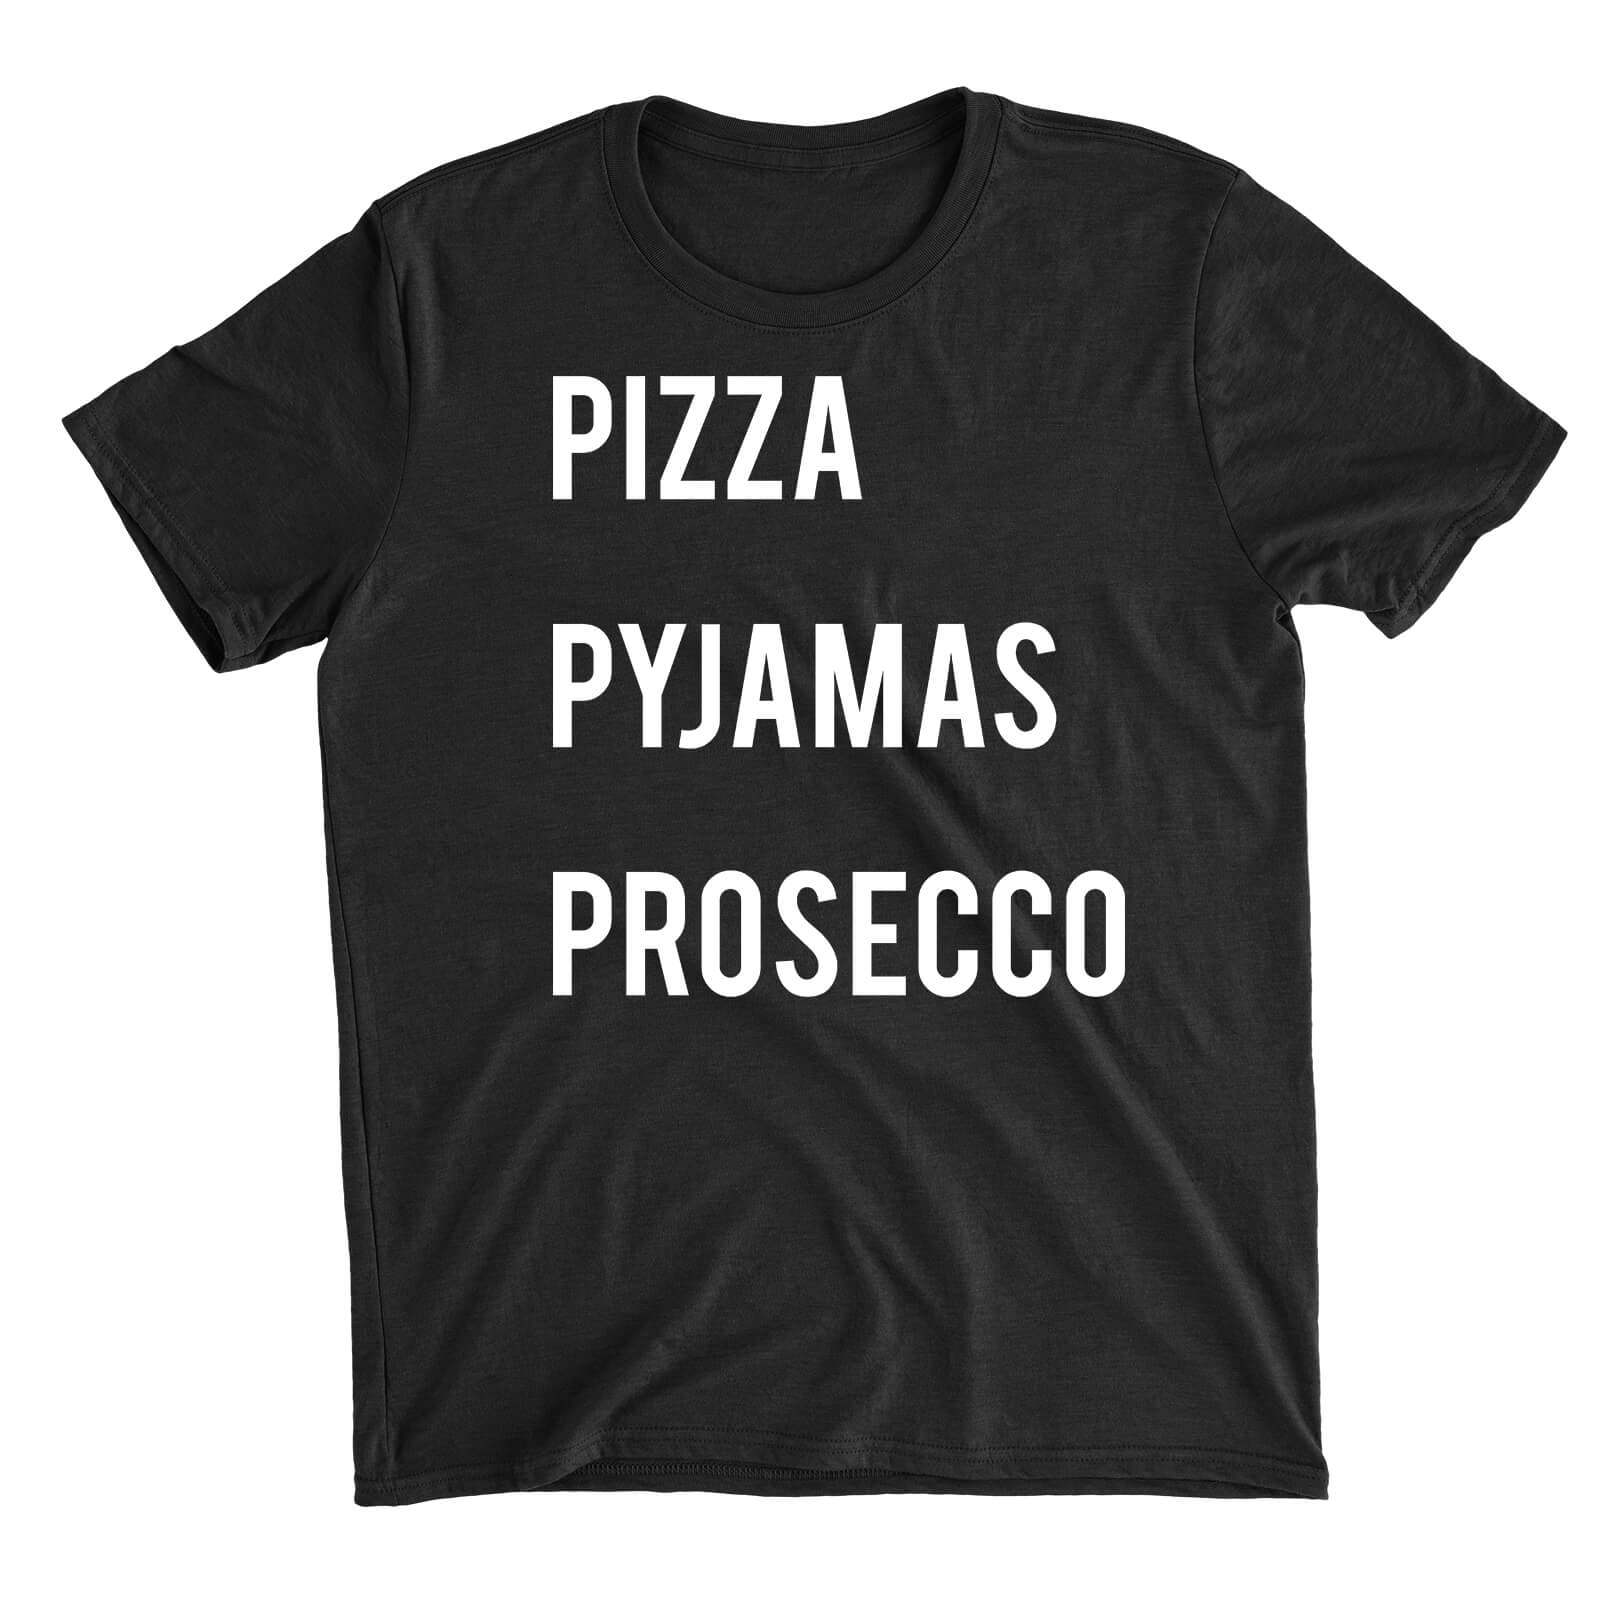 Pizza Pyjamas Prosecco Black T-Shirt - S - Black